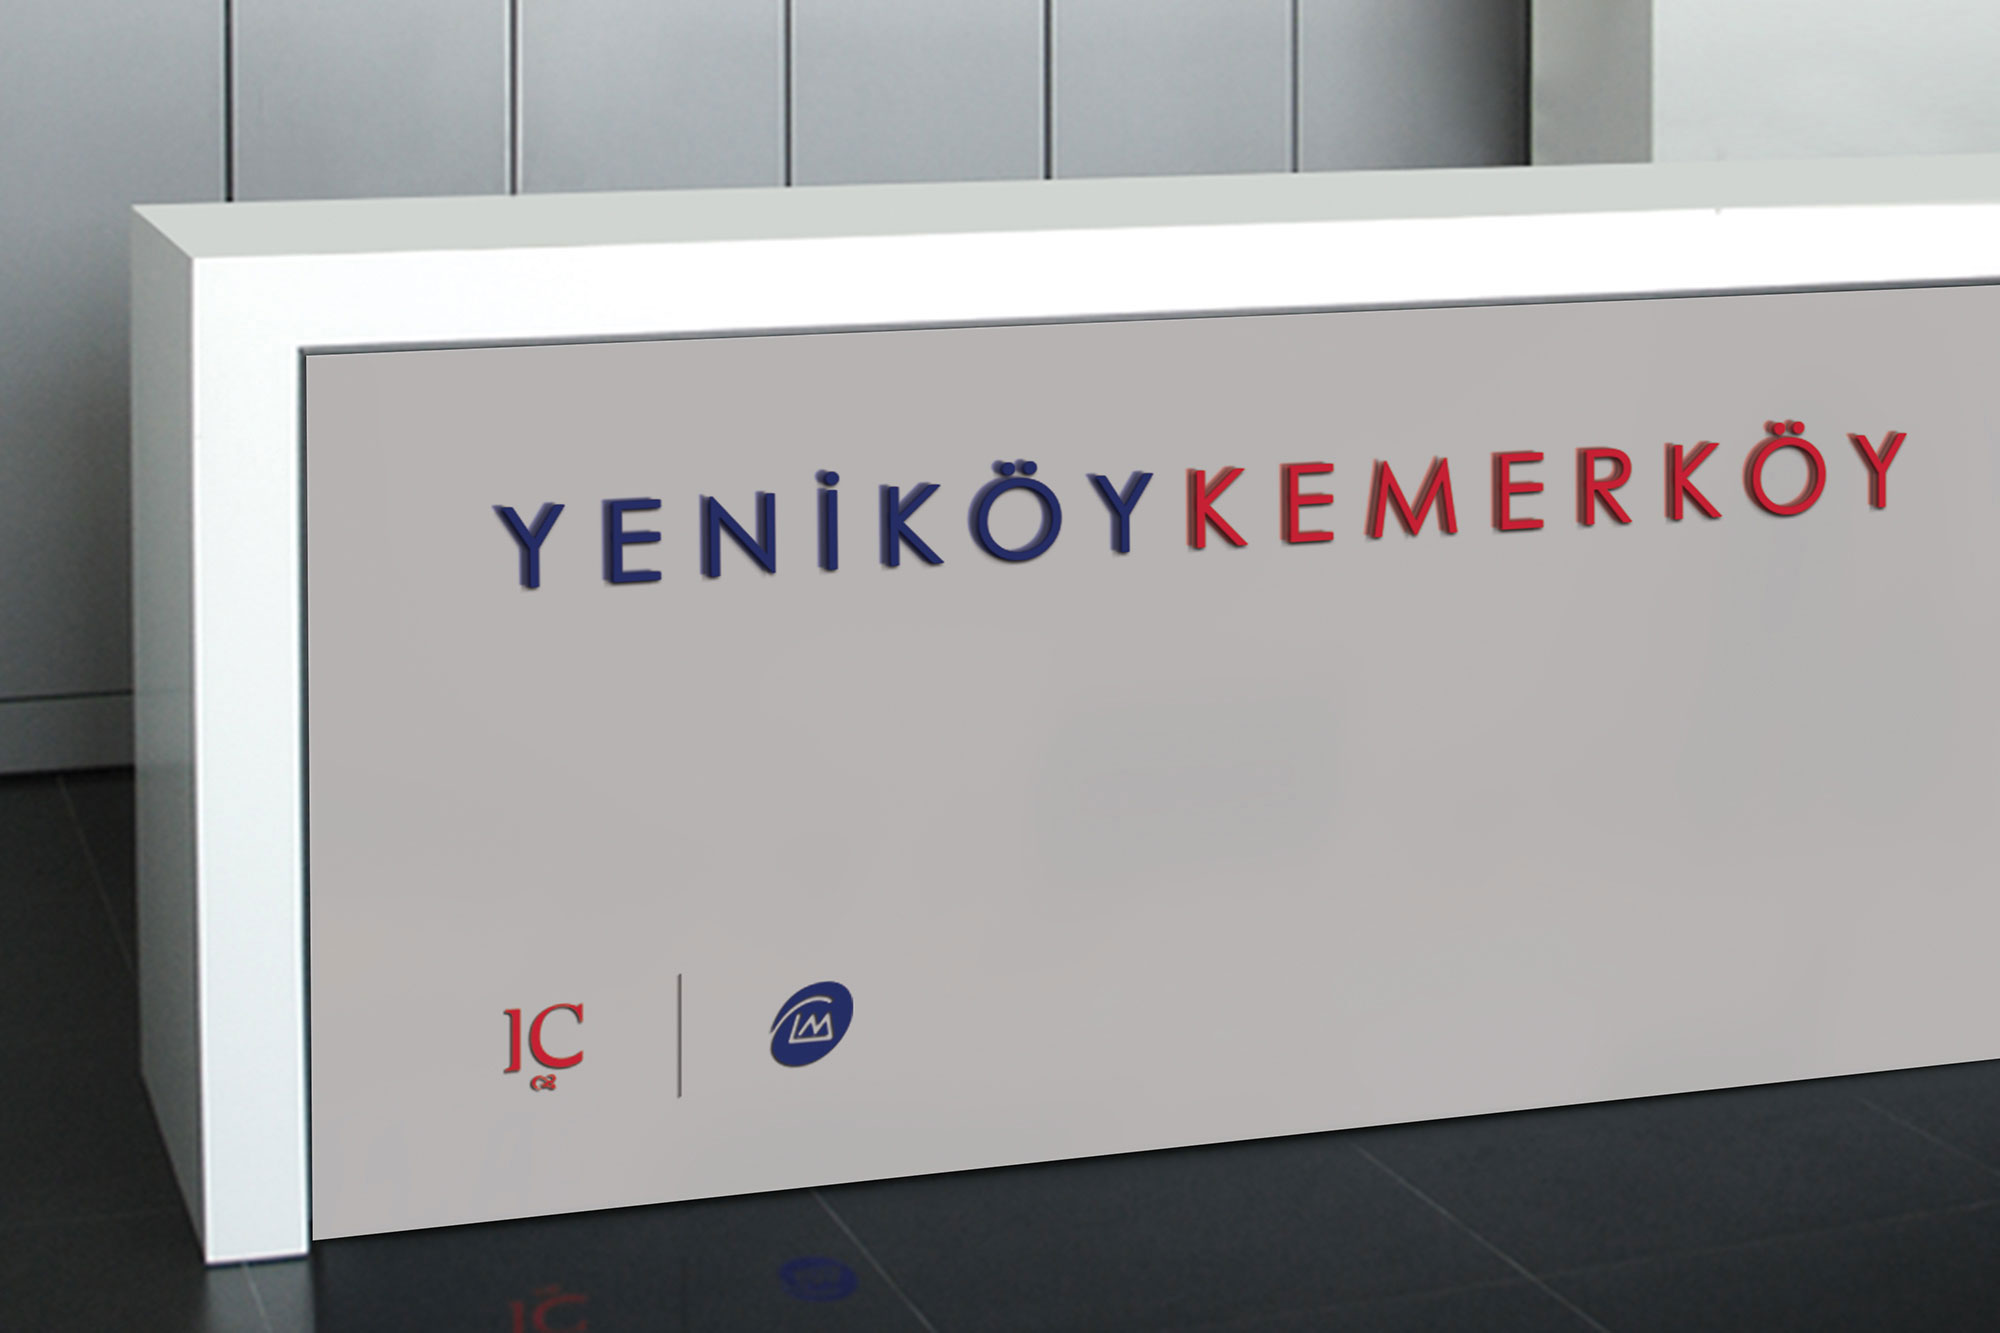 Yeniköy Kemerköy Corporate ID Brandbook